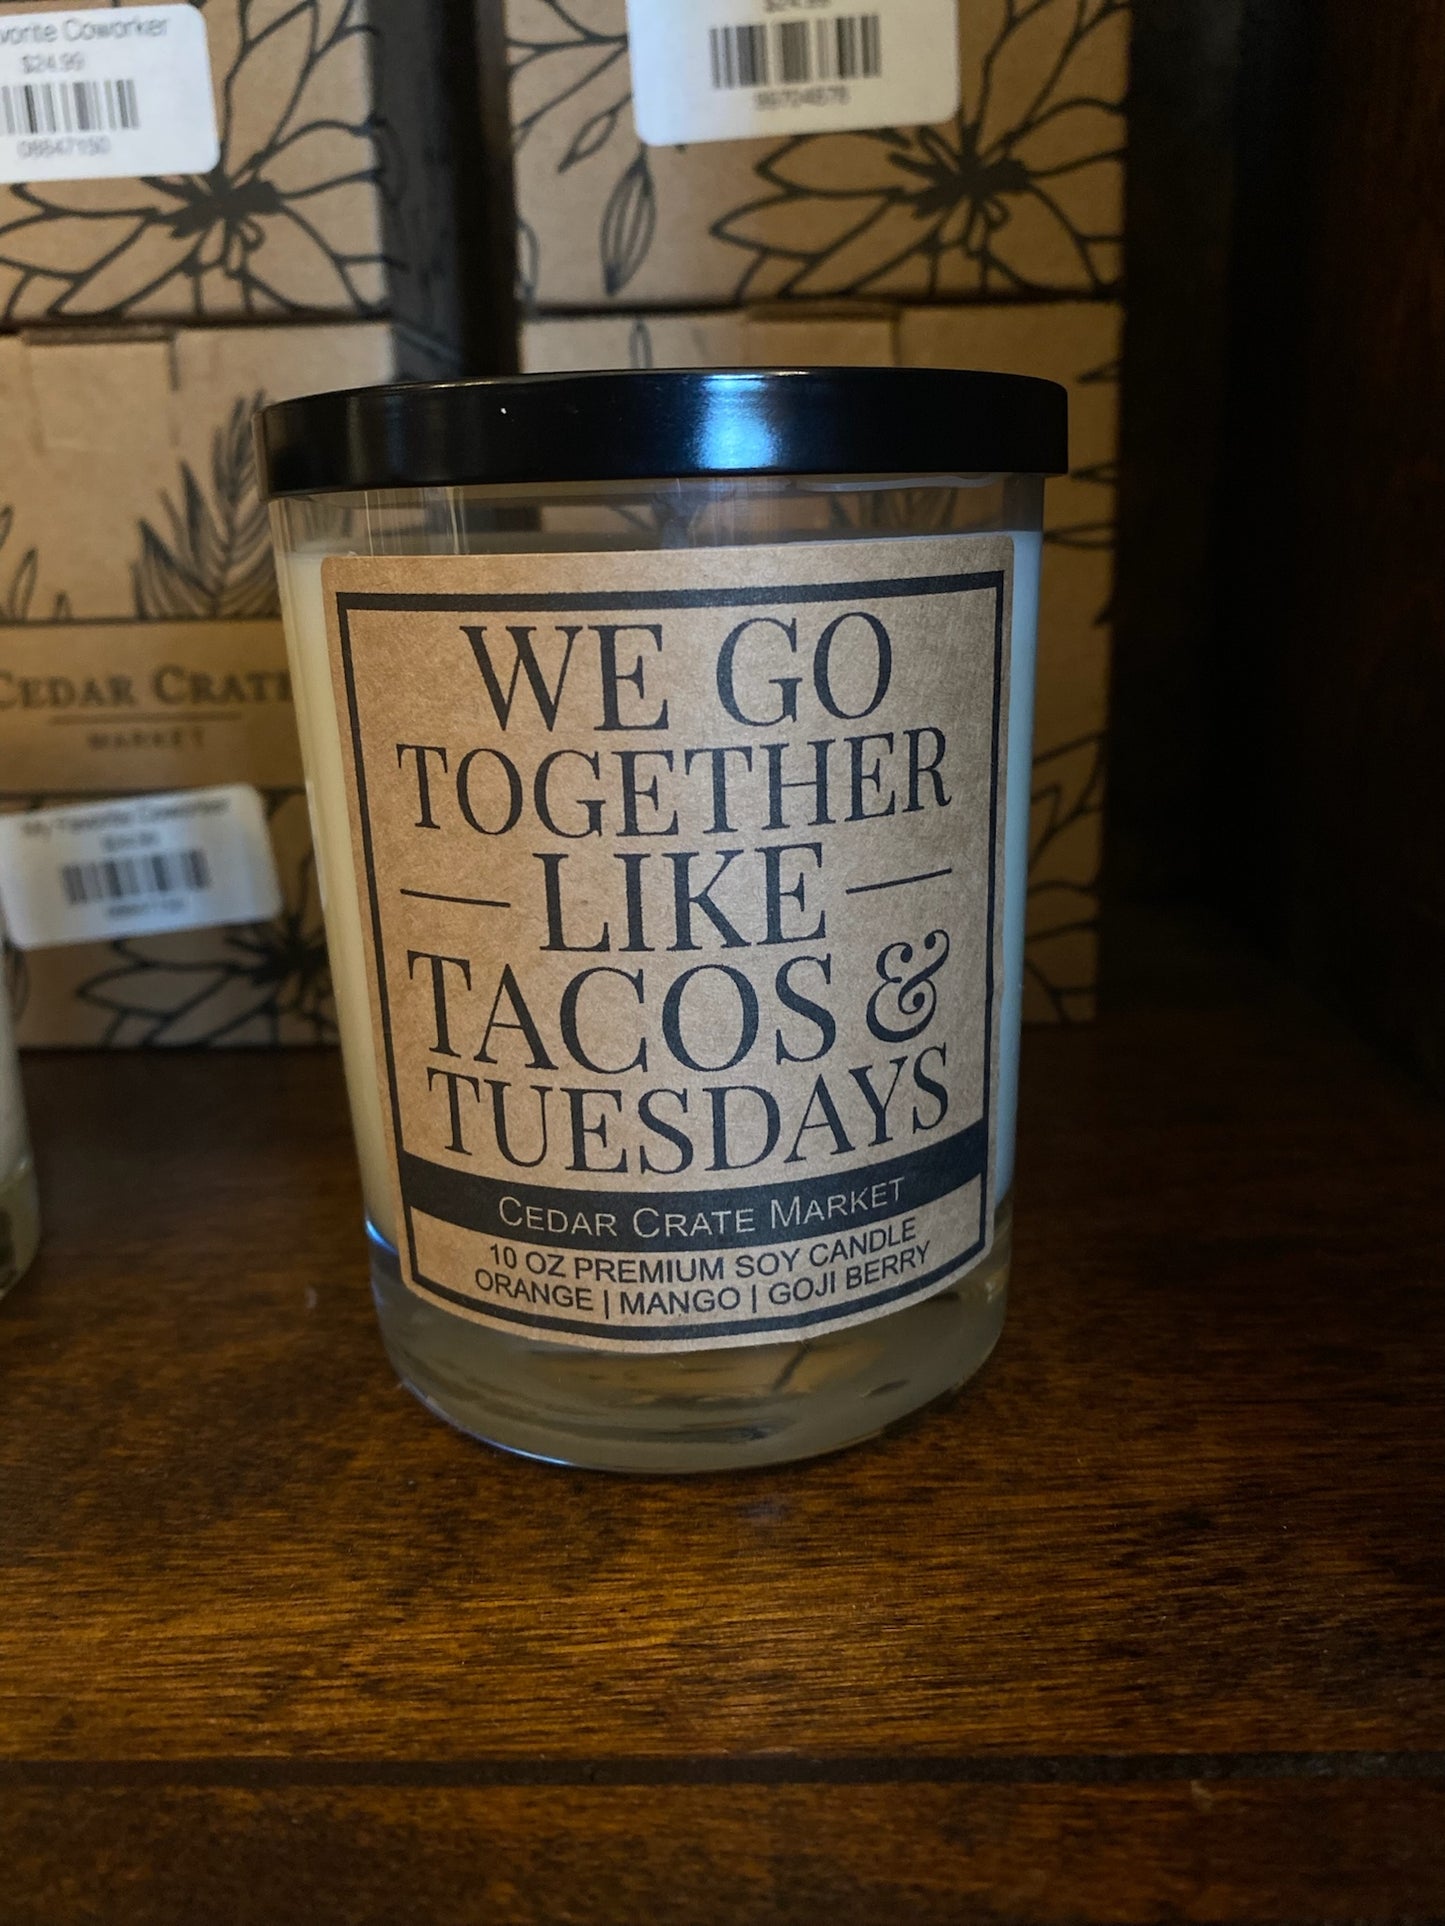 We Go Together Like Tacos and Tuesday